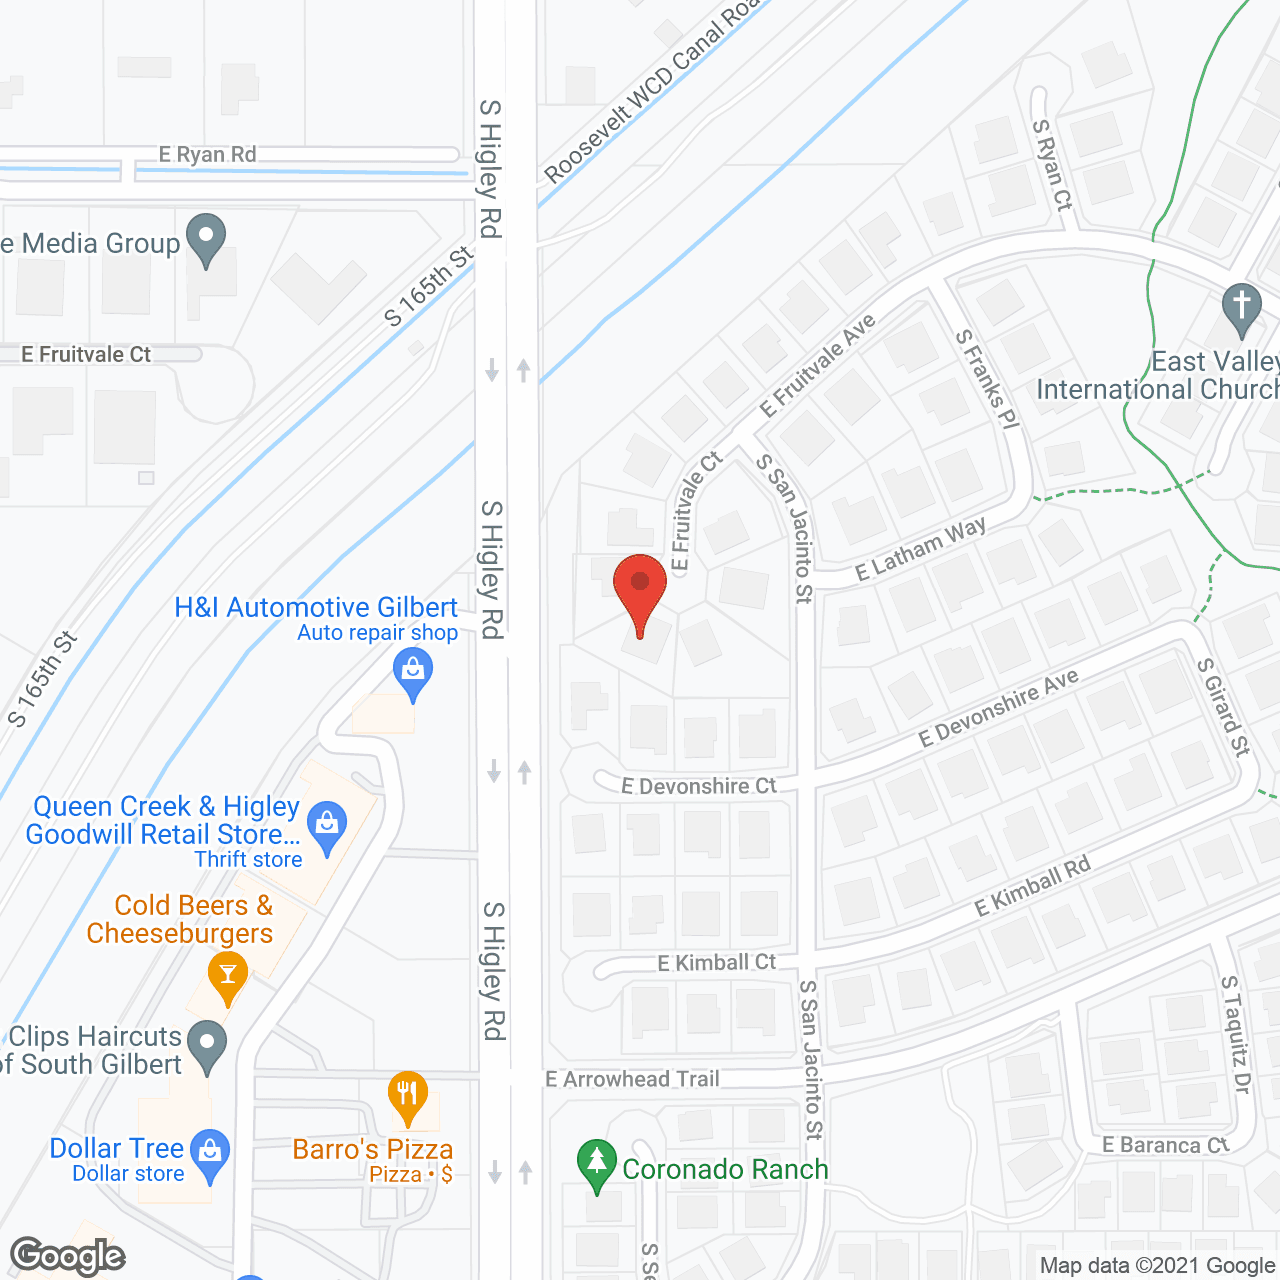 Coronado Ranch Adult Care Home in google map